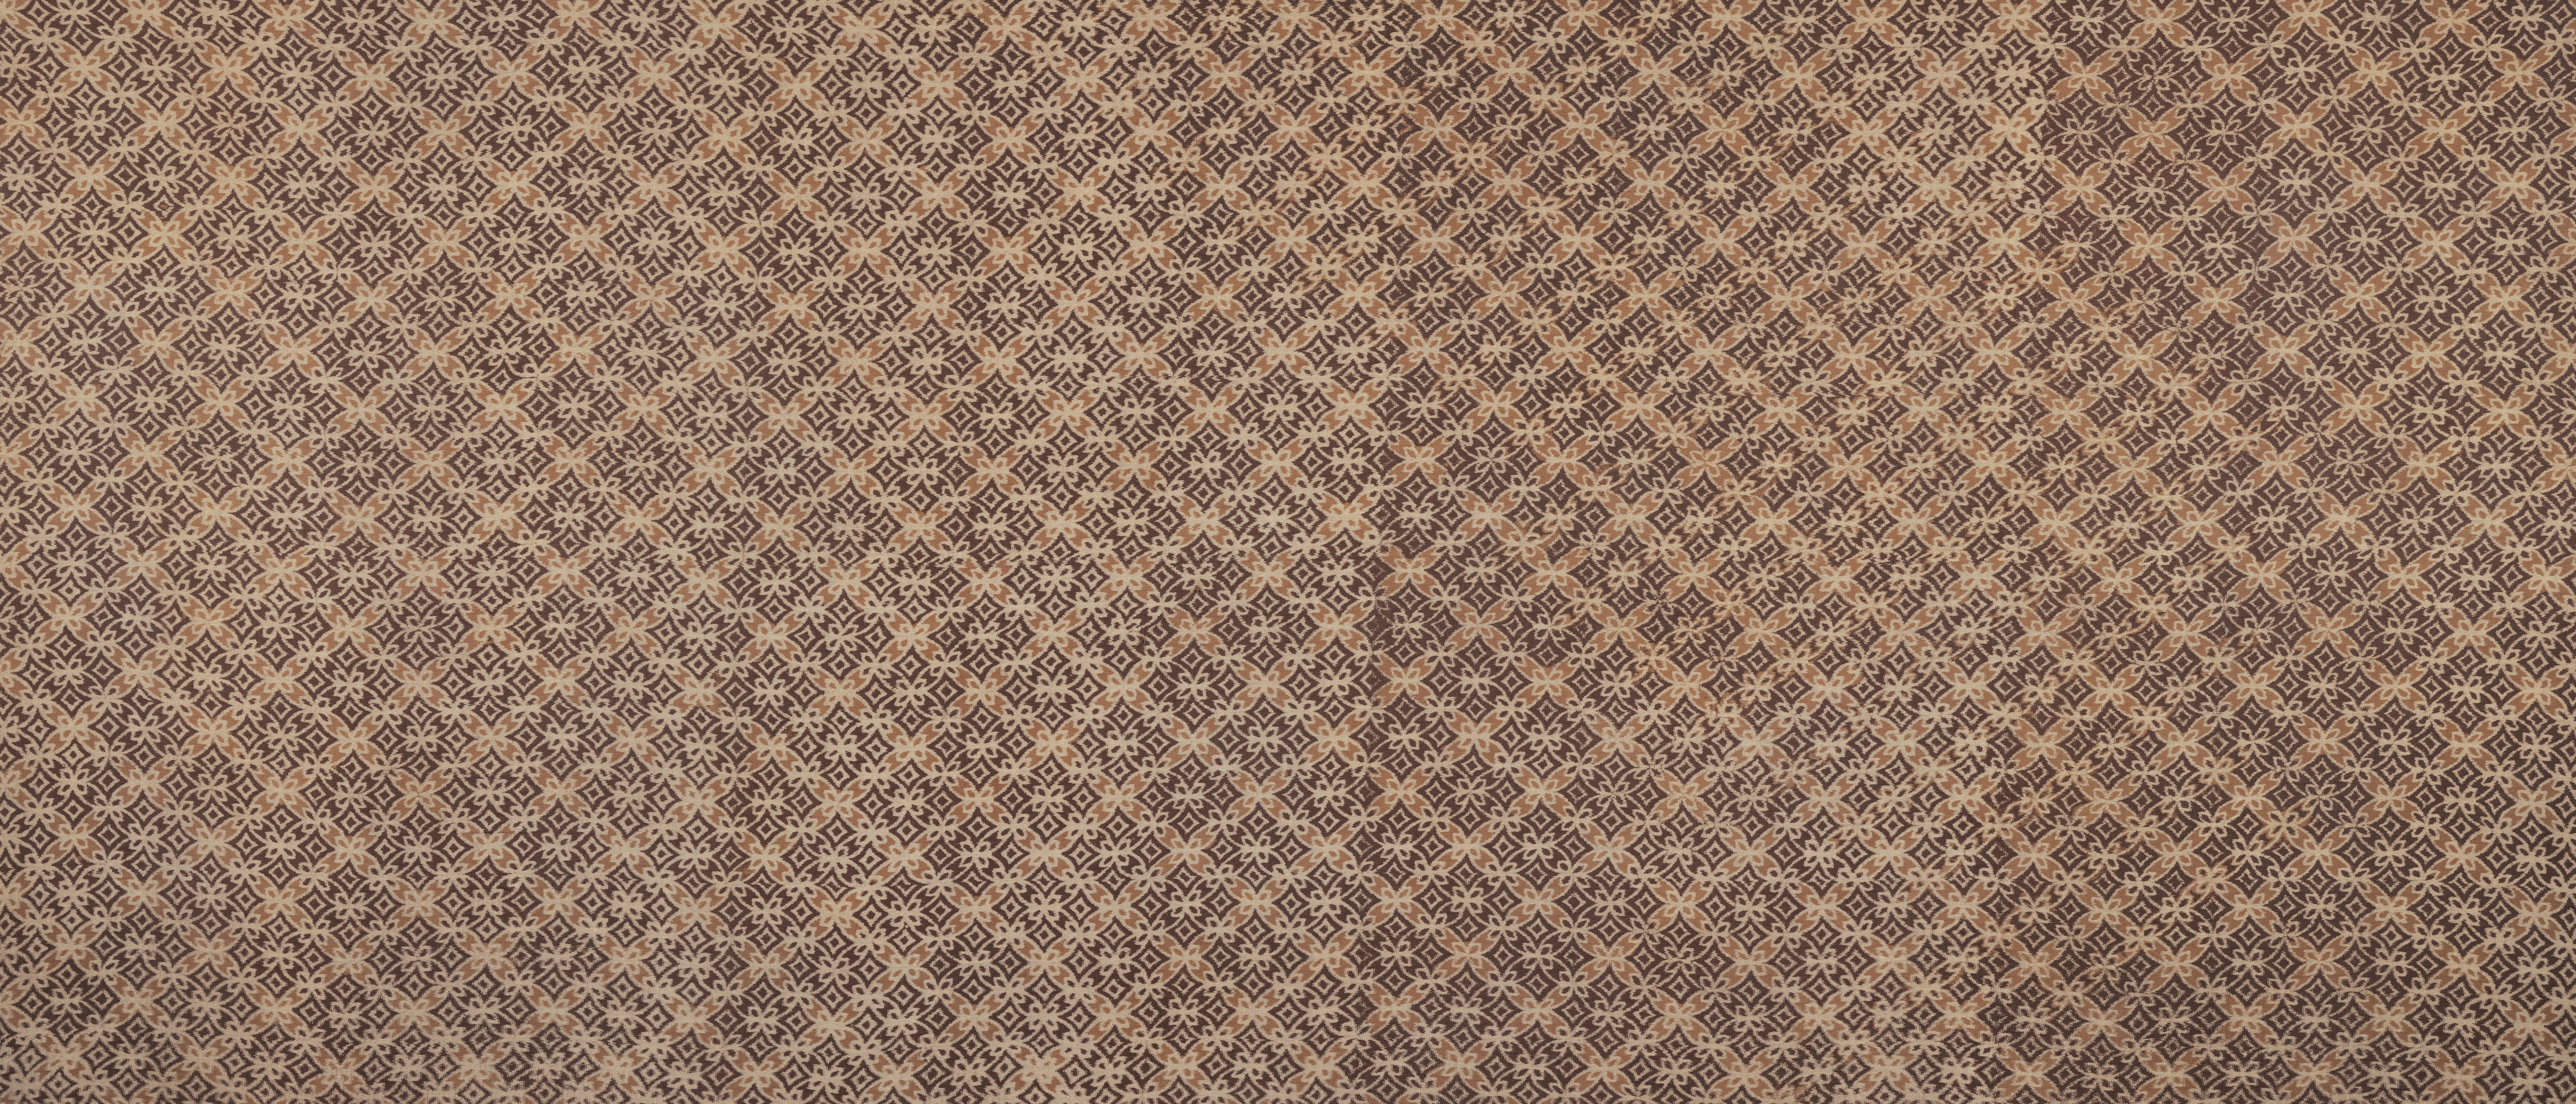 Ultra Wide Ultrawide Fabric Texture Pattern 6410x2747